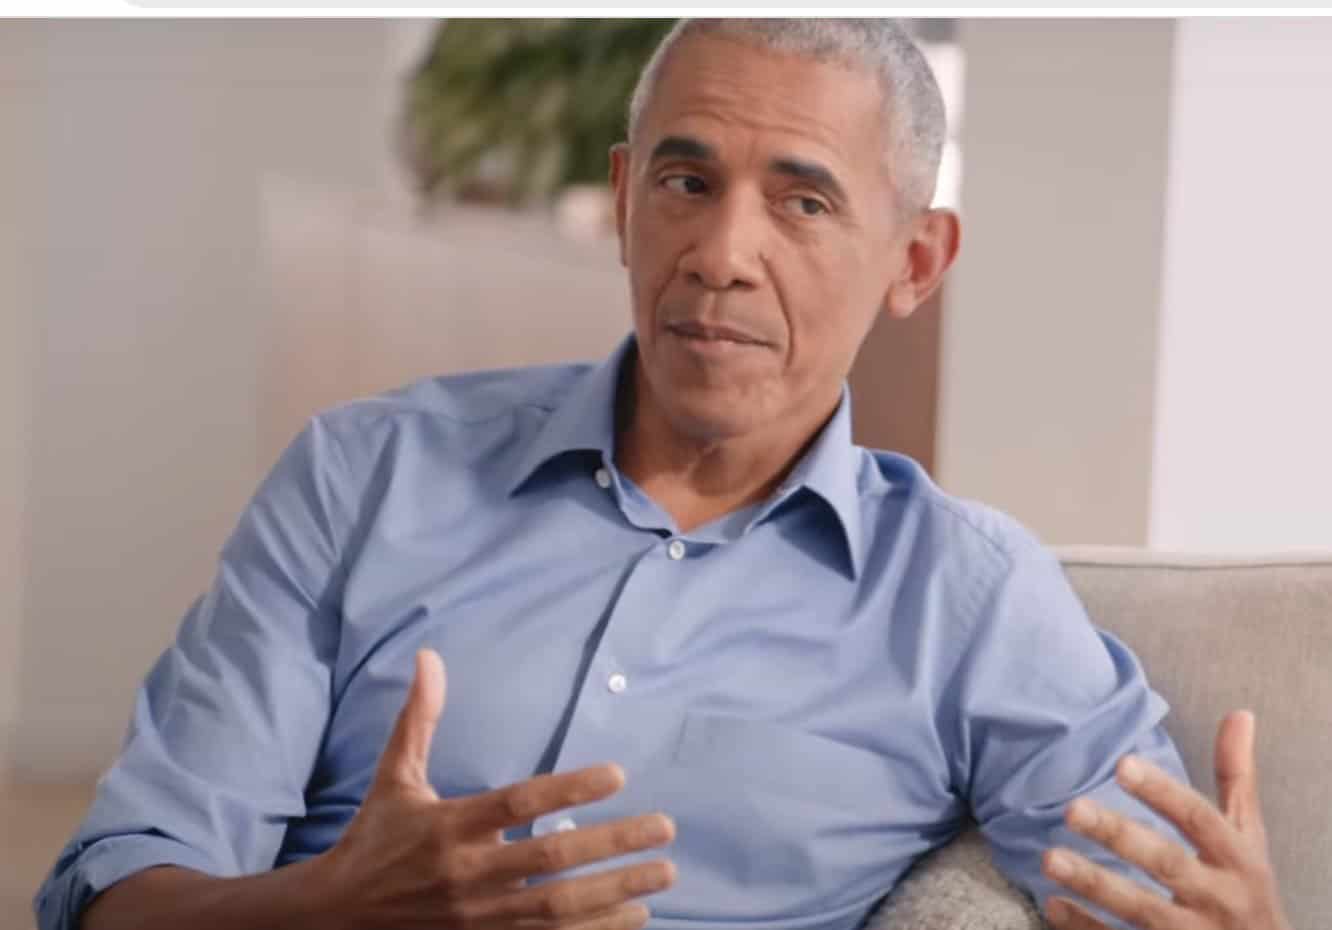 read-president-obama’s-inspiring-message-on-obamacare’s-14th-birthday